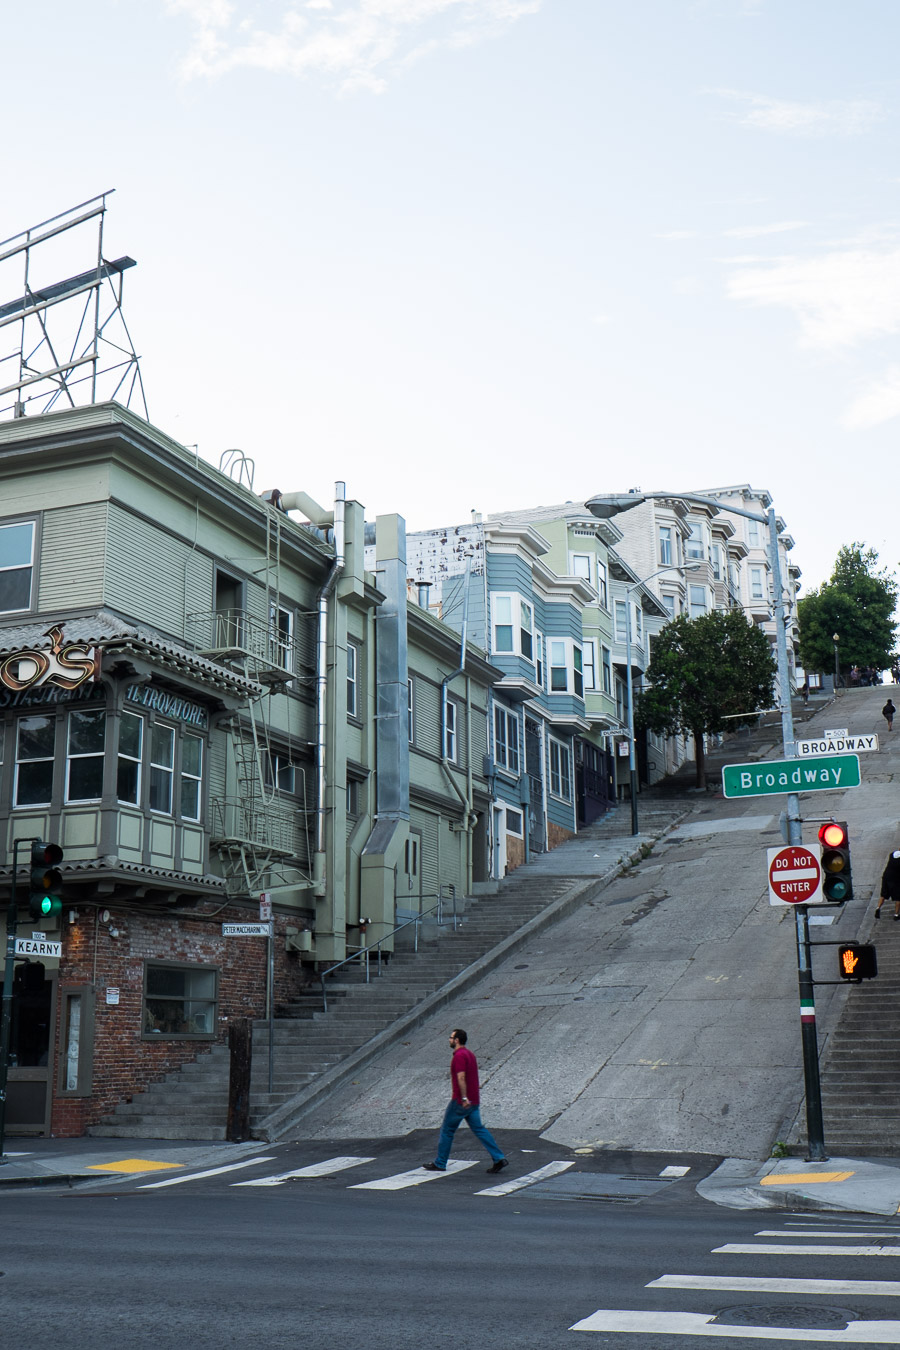 San Francisco has extremely steep hills. I walked up many of them.